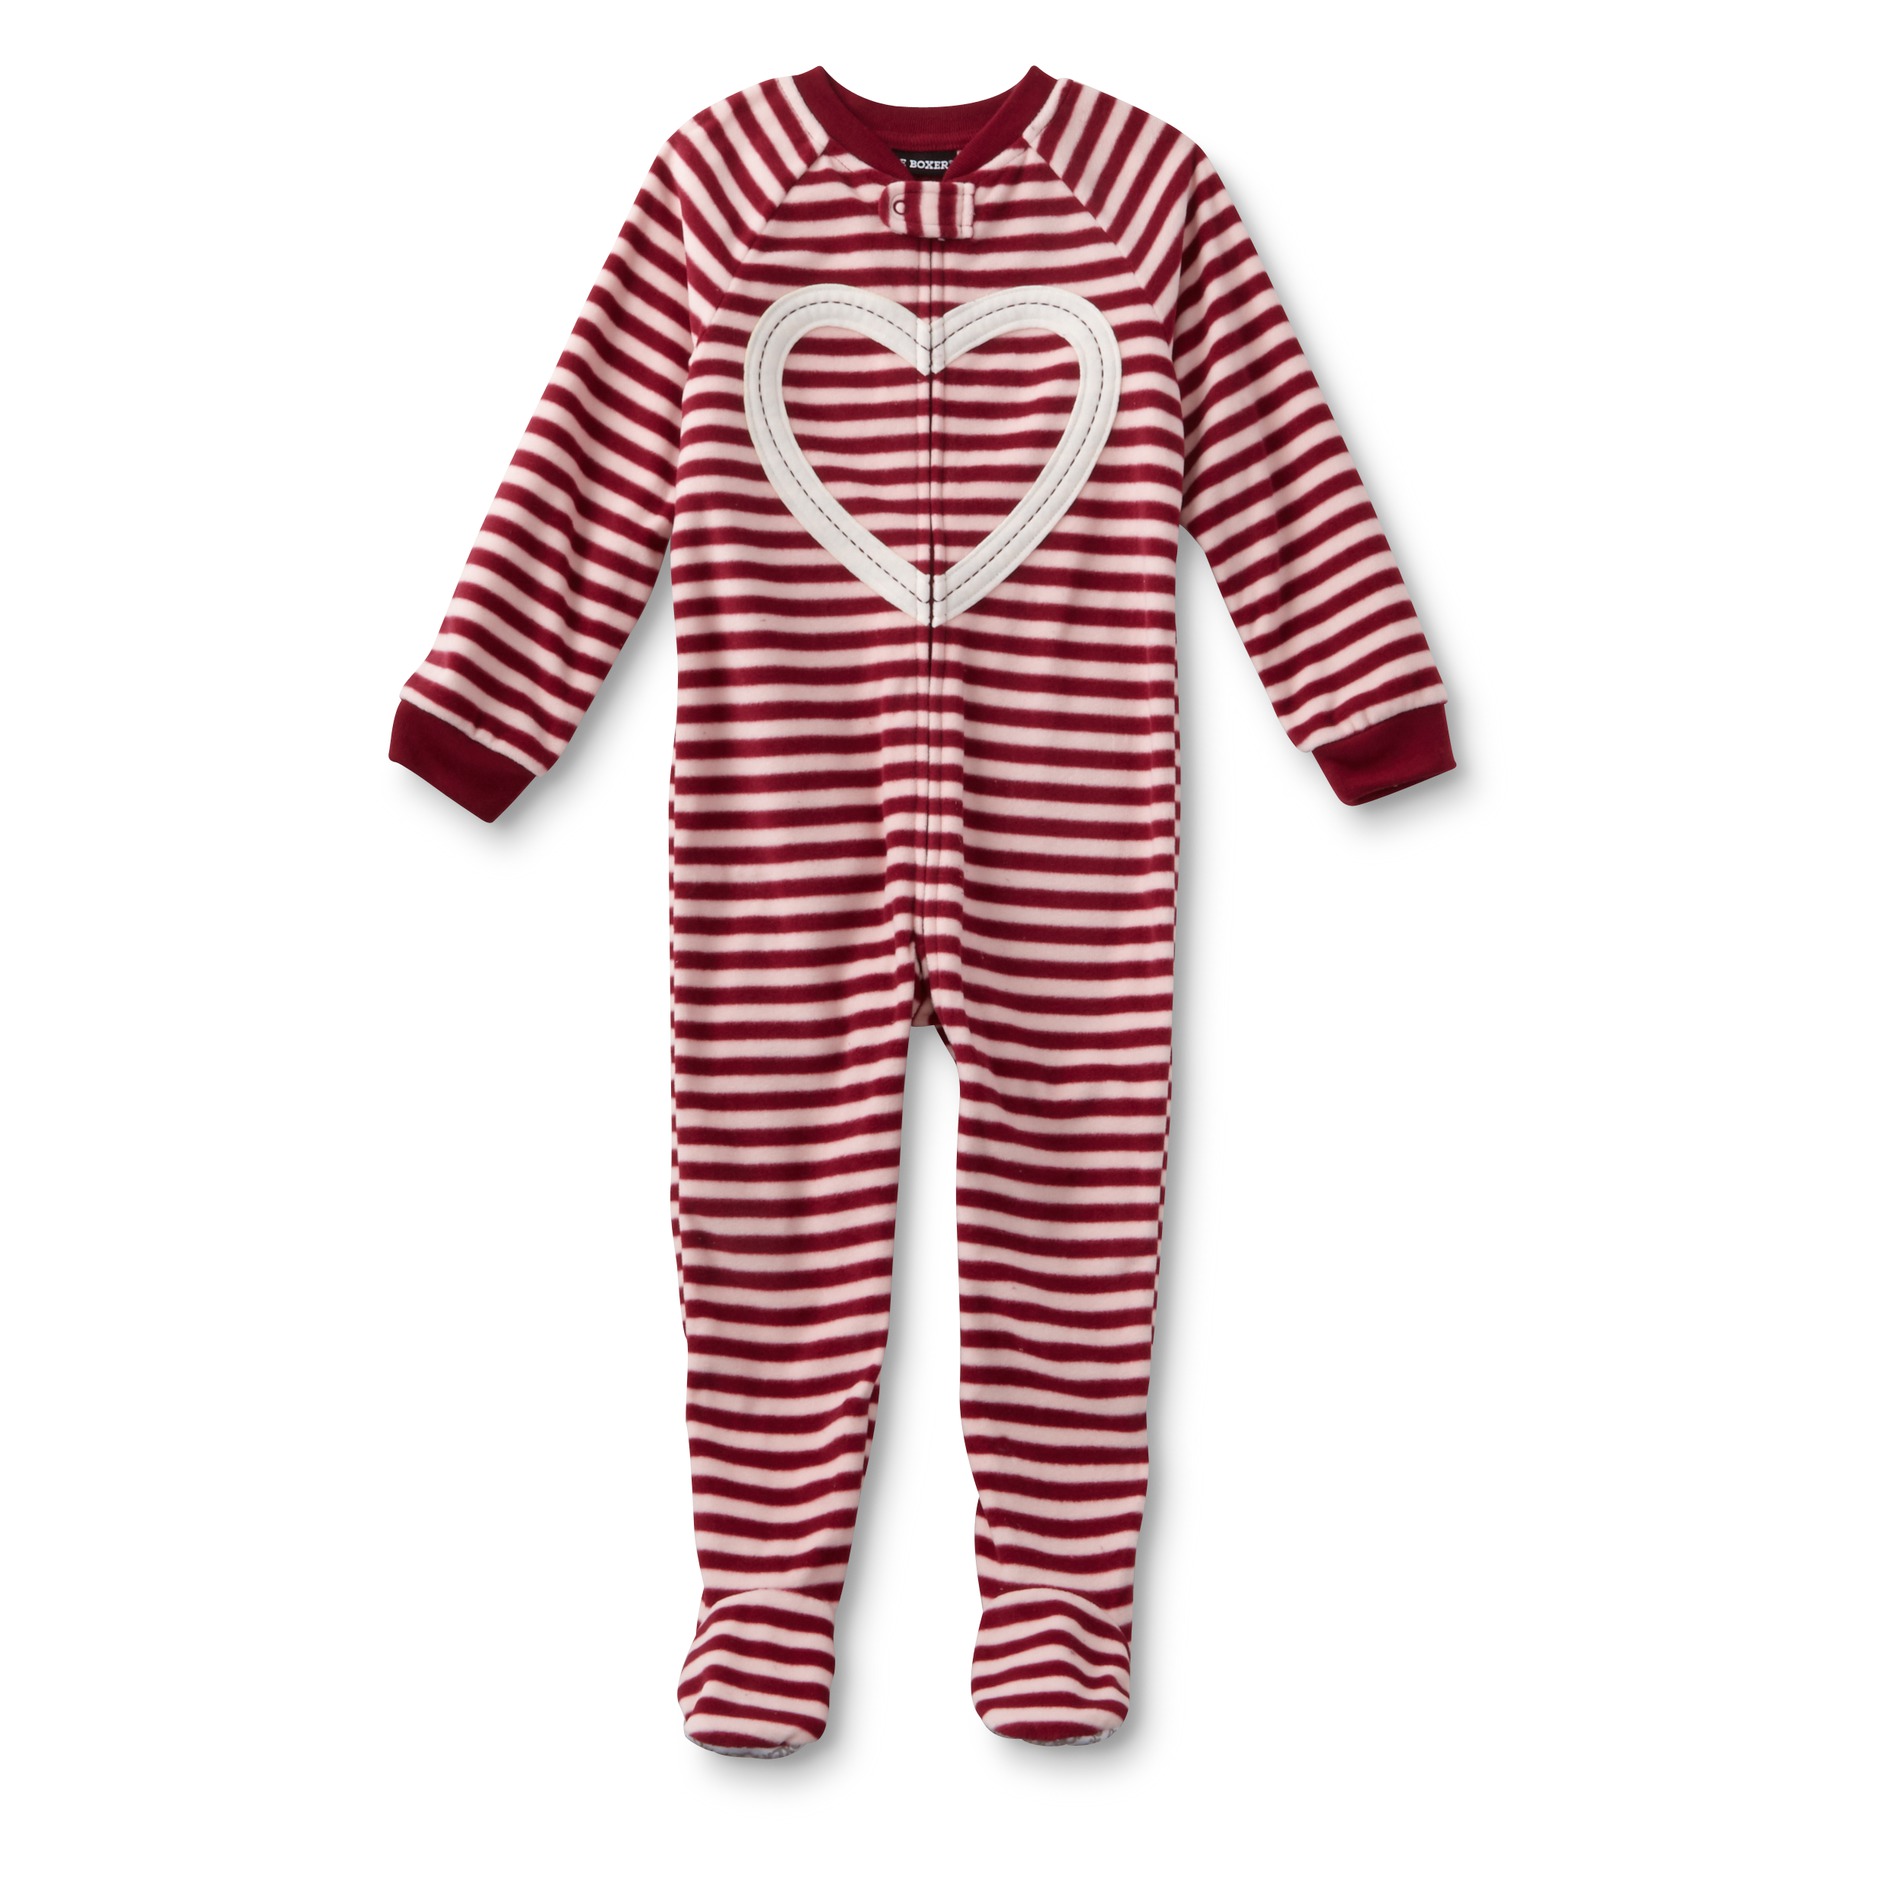 Joe Boxer Infant & Toddler Girl's Sleeper Pajamas - Striped & Heart